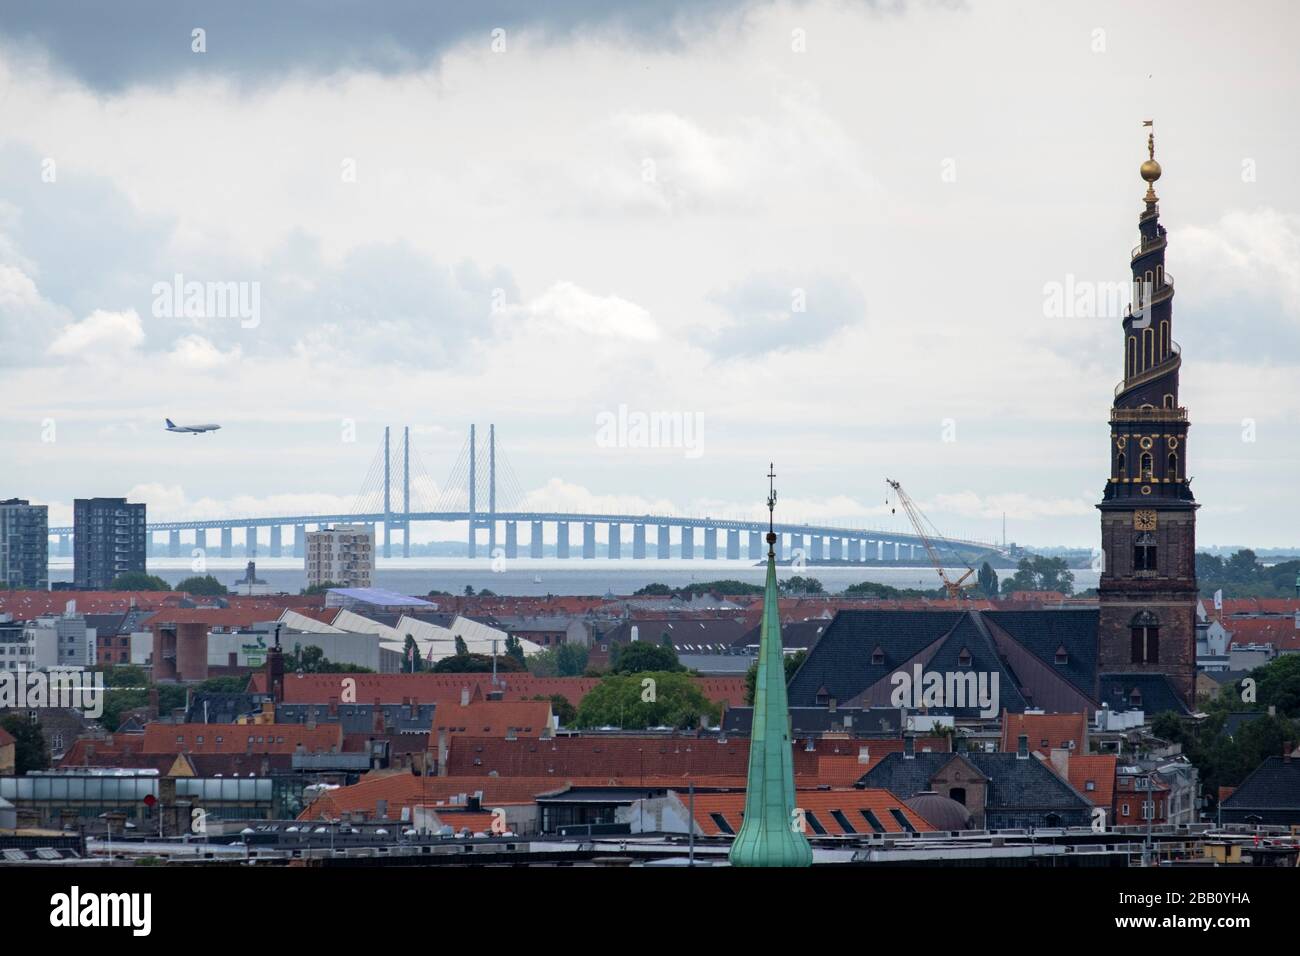 Airplane flying over Copenhagen with the Oresund Bridge in the background, Copenhagen, Denmark, Europe Stock Photo